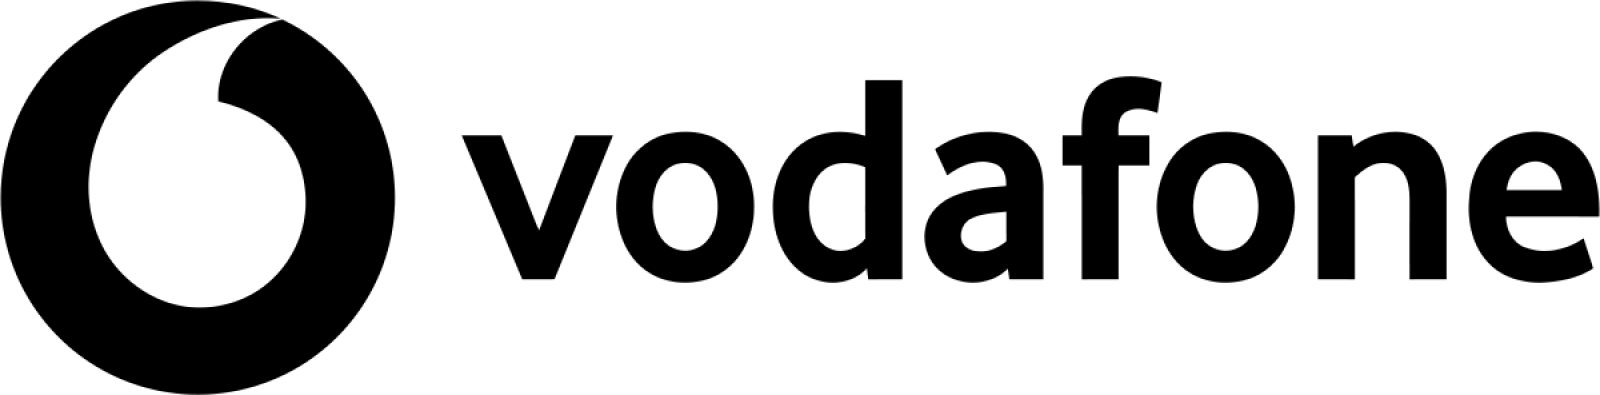 Vodafone logo in black on a transparent background